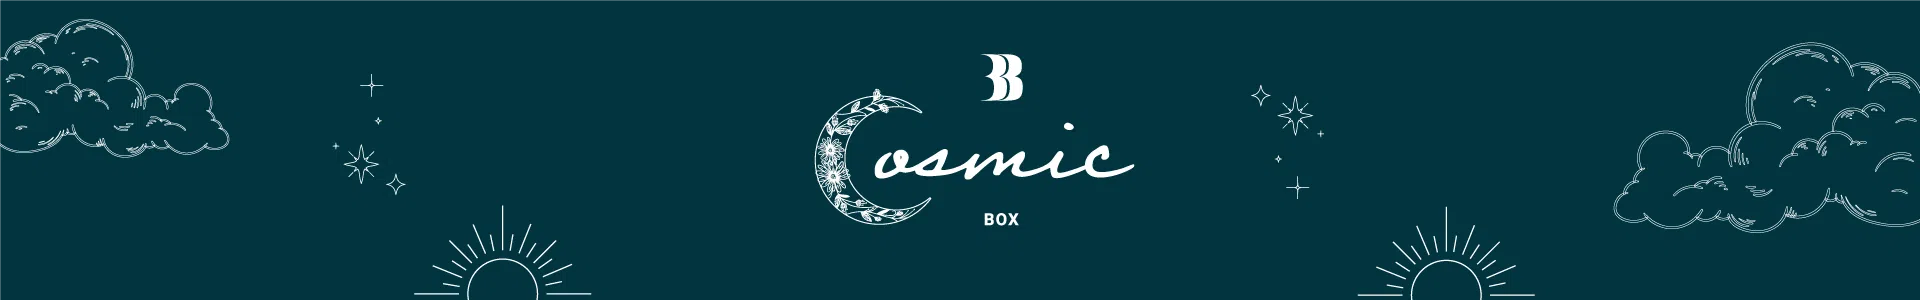 Cosmic-box-bandeau